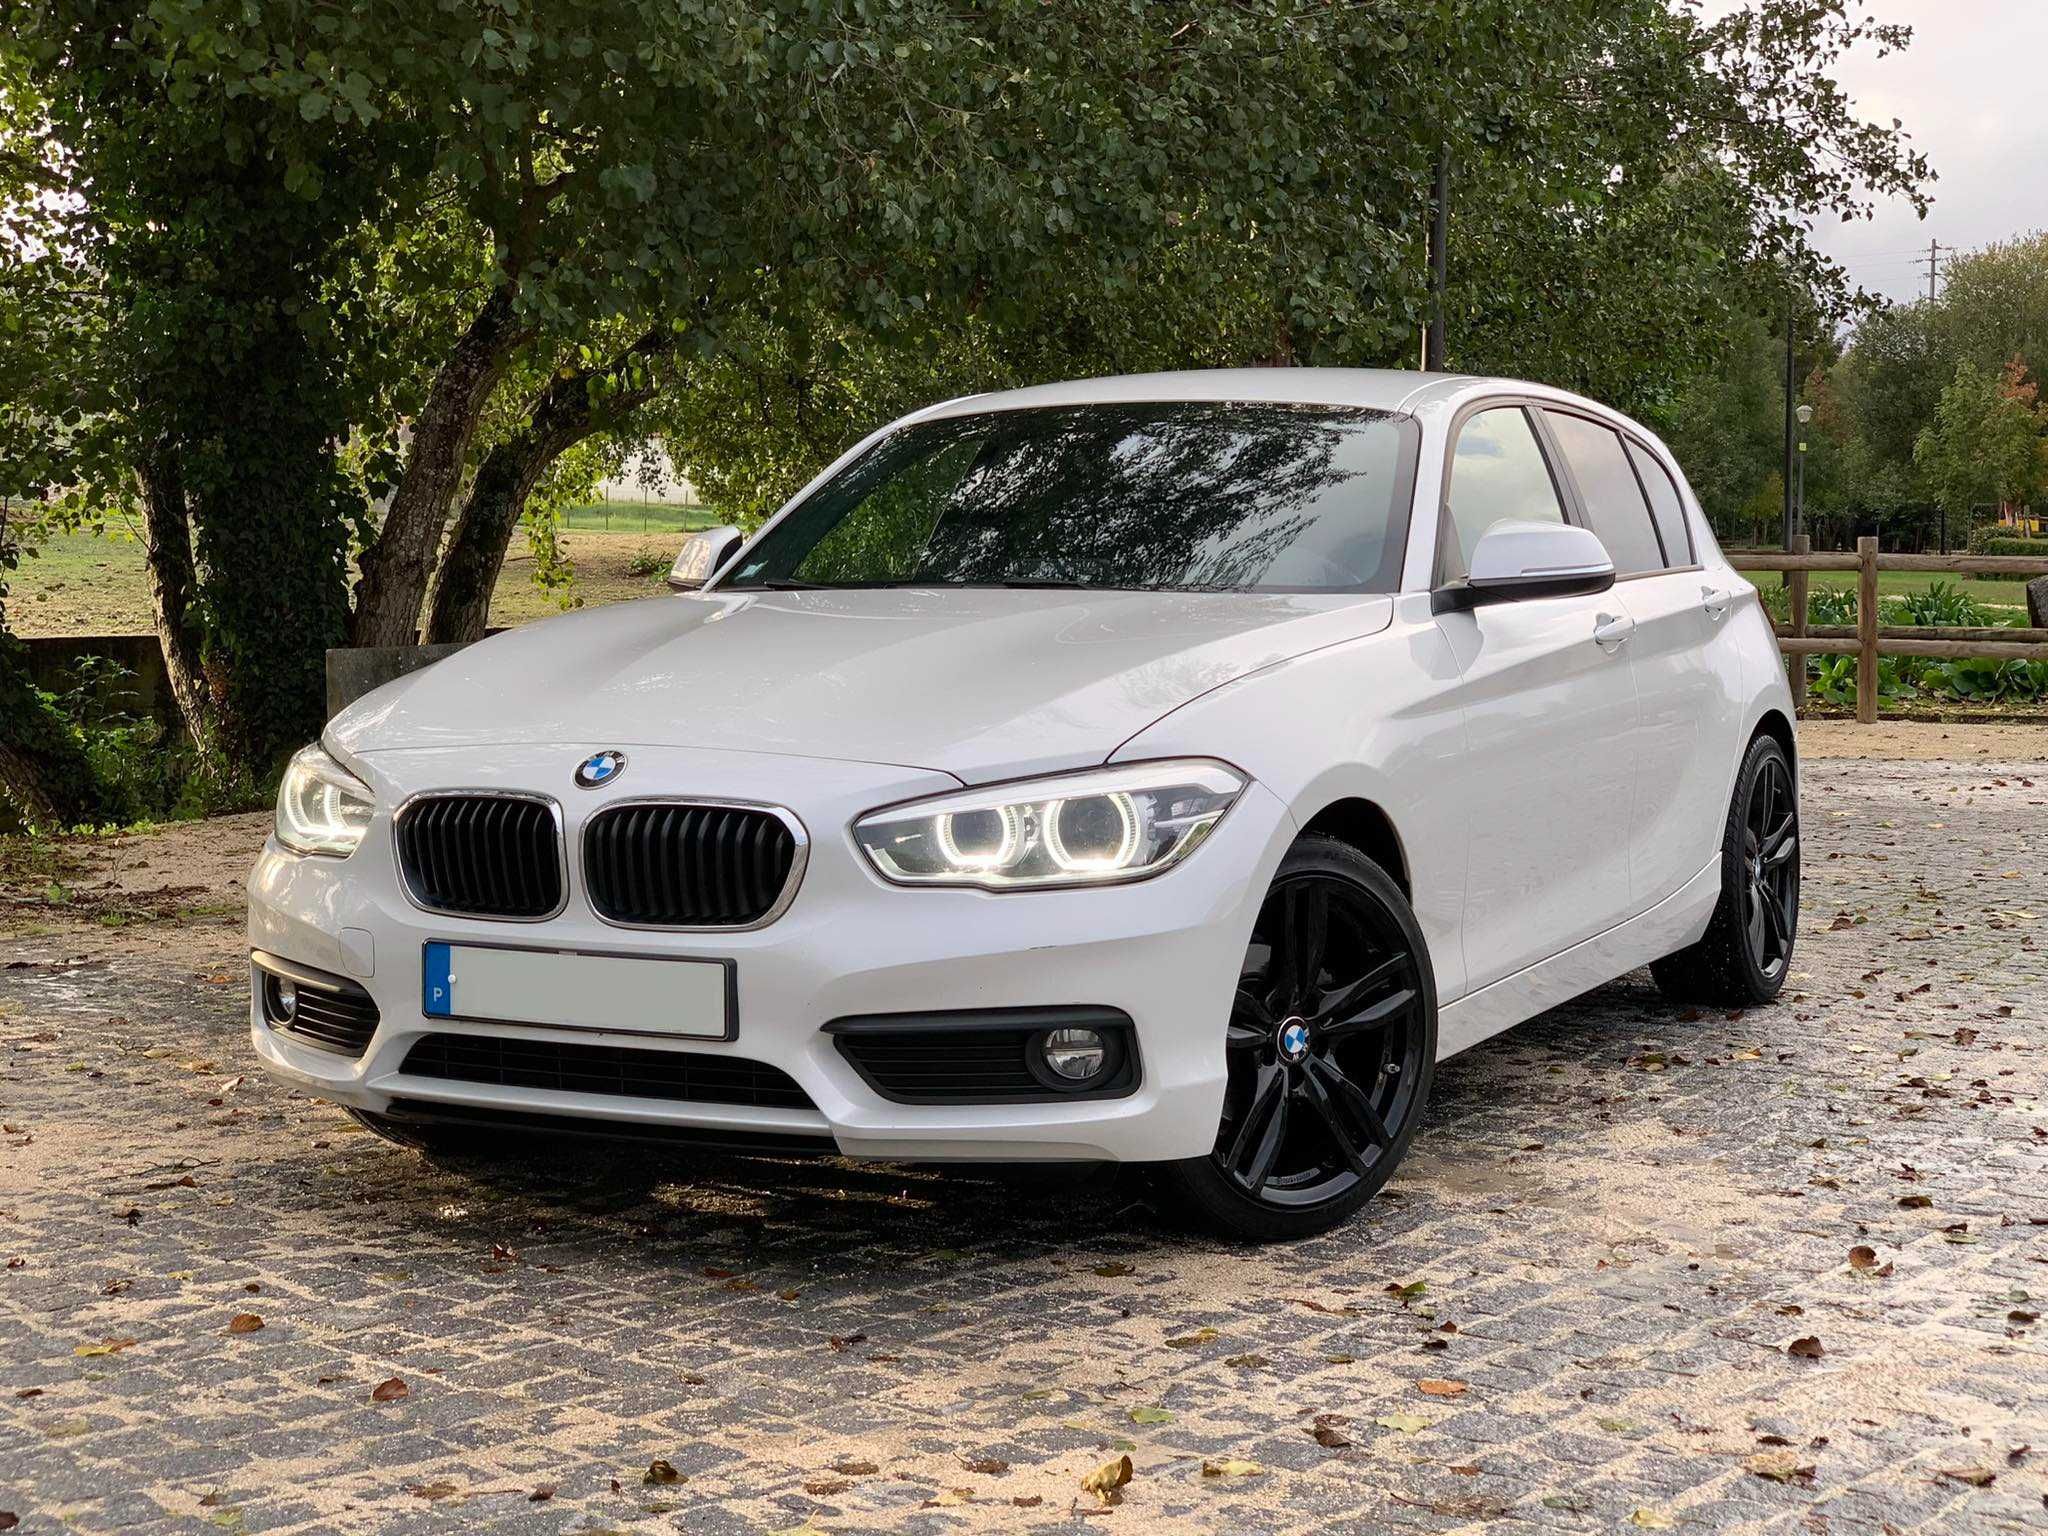 BMW 116d 2017 Sport LED, PELE, GPS, teto preto